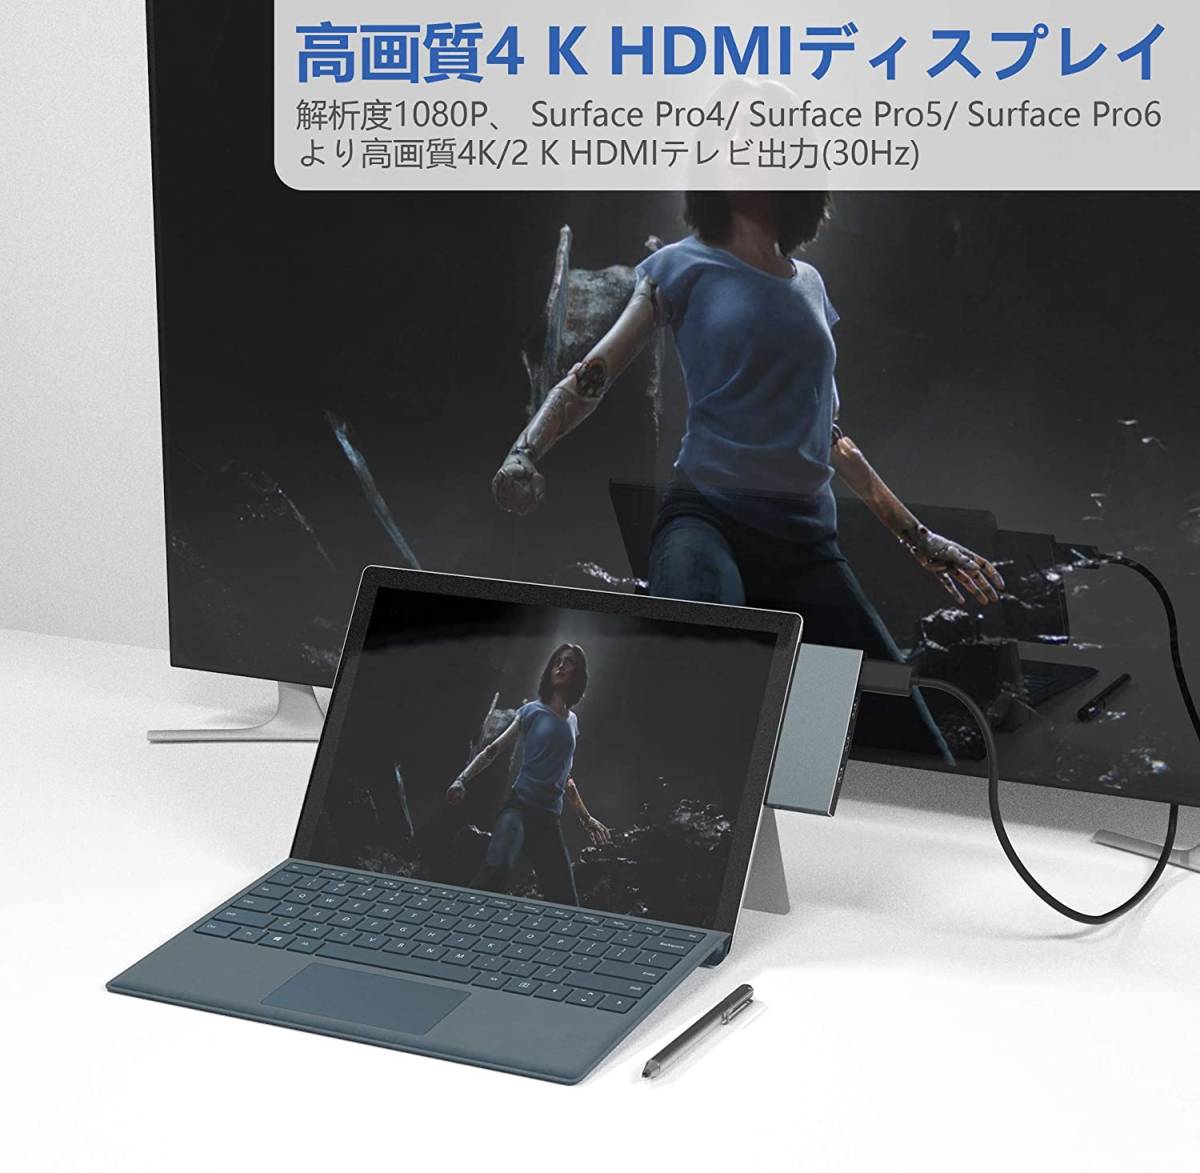 Microsoft Surface Pro 6 / Pro 5 / Pro 4 exclusive use USB 3.0 hub 